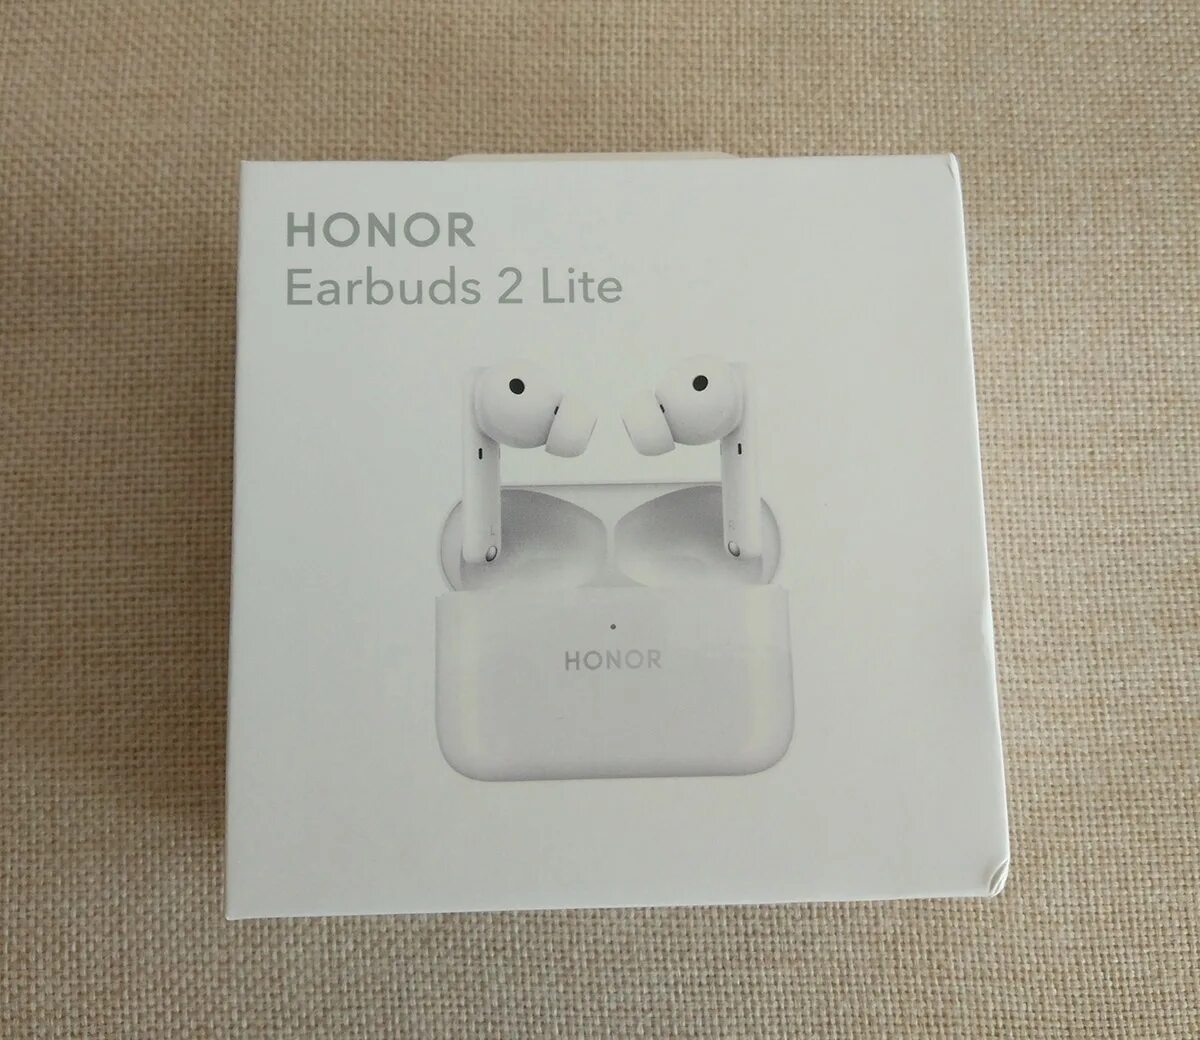 Наушники хонор Earbuds 2 Lite. Honor Earbuds 2 Lite t0005. Наушники хонор Earbuds 2 Lite коробка. TWS Honor Earbuds 2 Lite приложение.